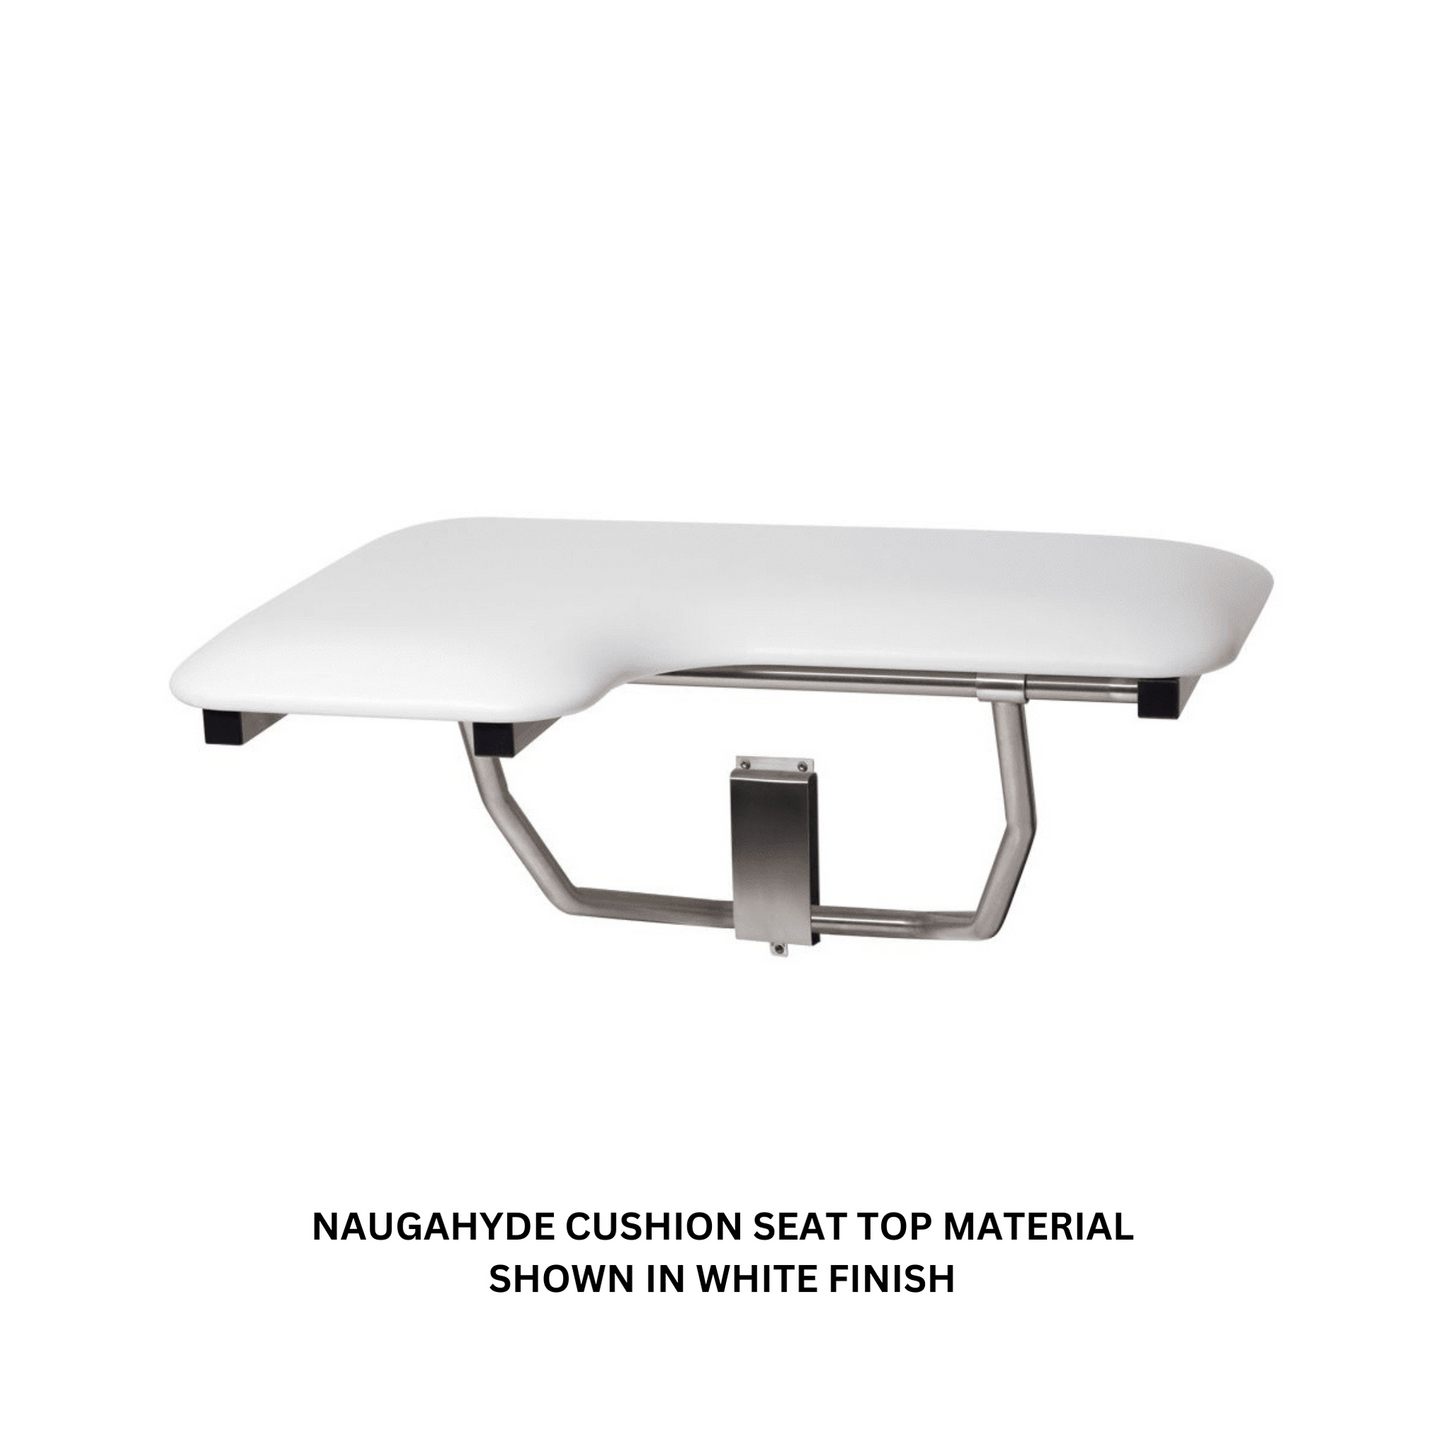 Seachrome Signature Series 26" W x 23" D Naugahyde Almond Cushion Right-Handed Configuration L-Shaped Transfer Shower Seat